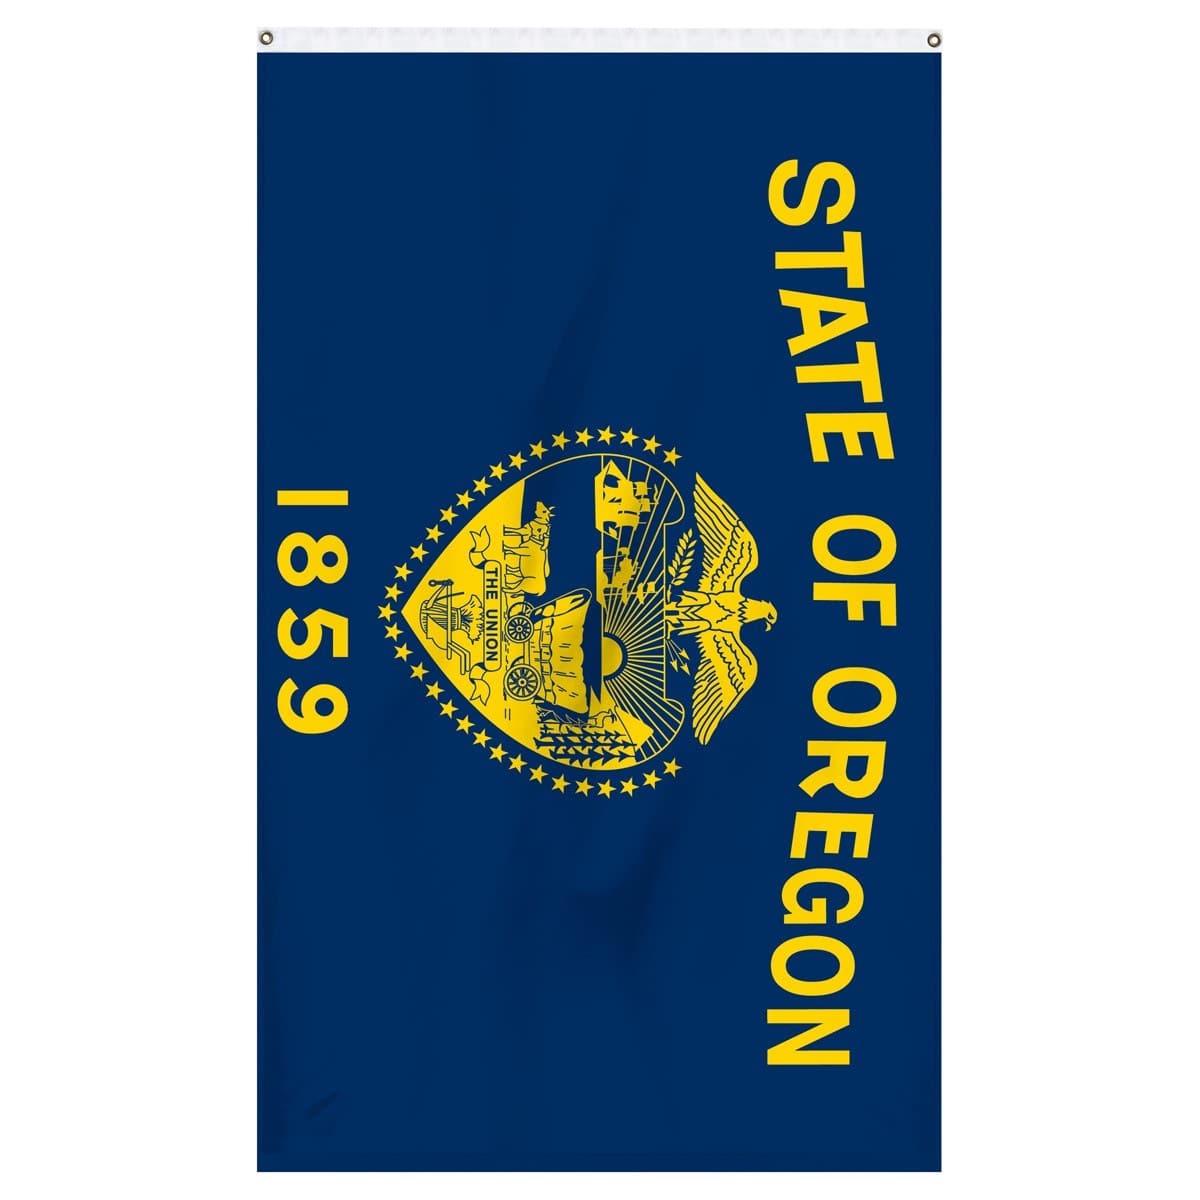 Oregon State Flag - Atlantic Flagpole